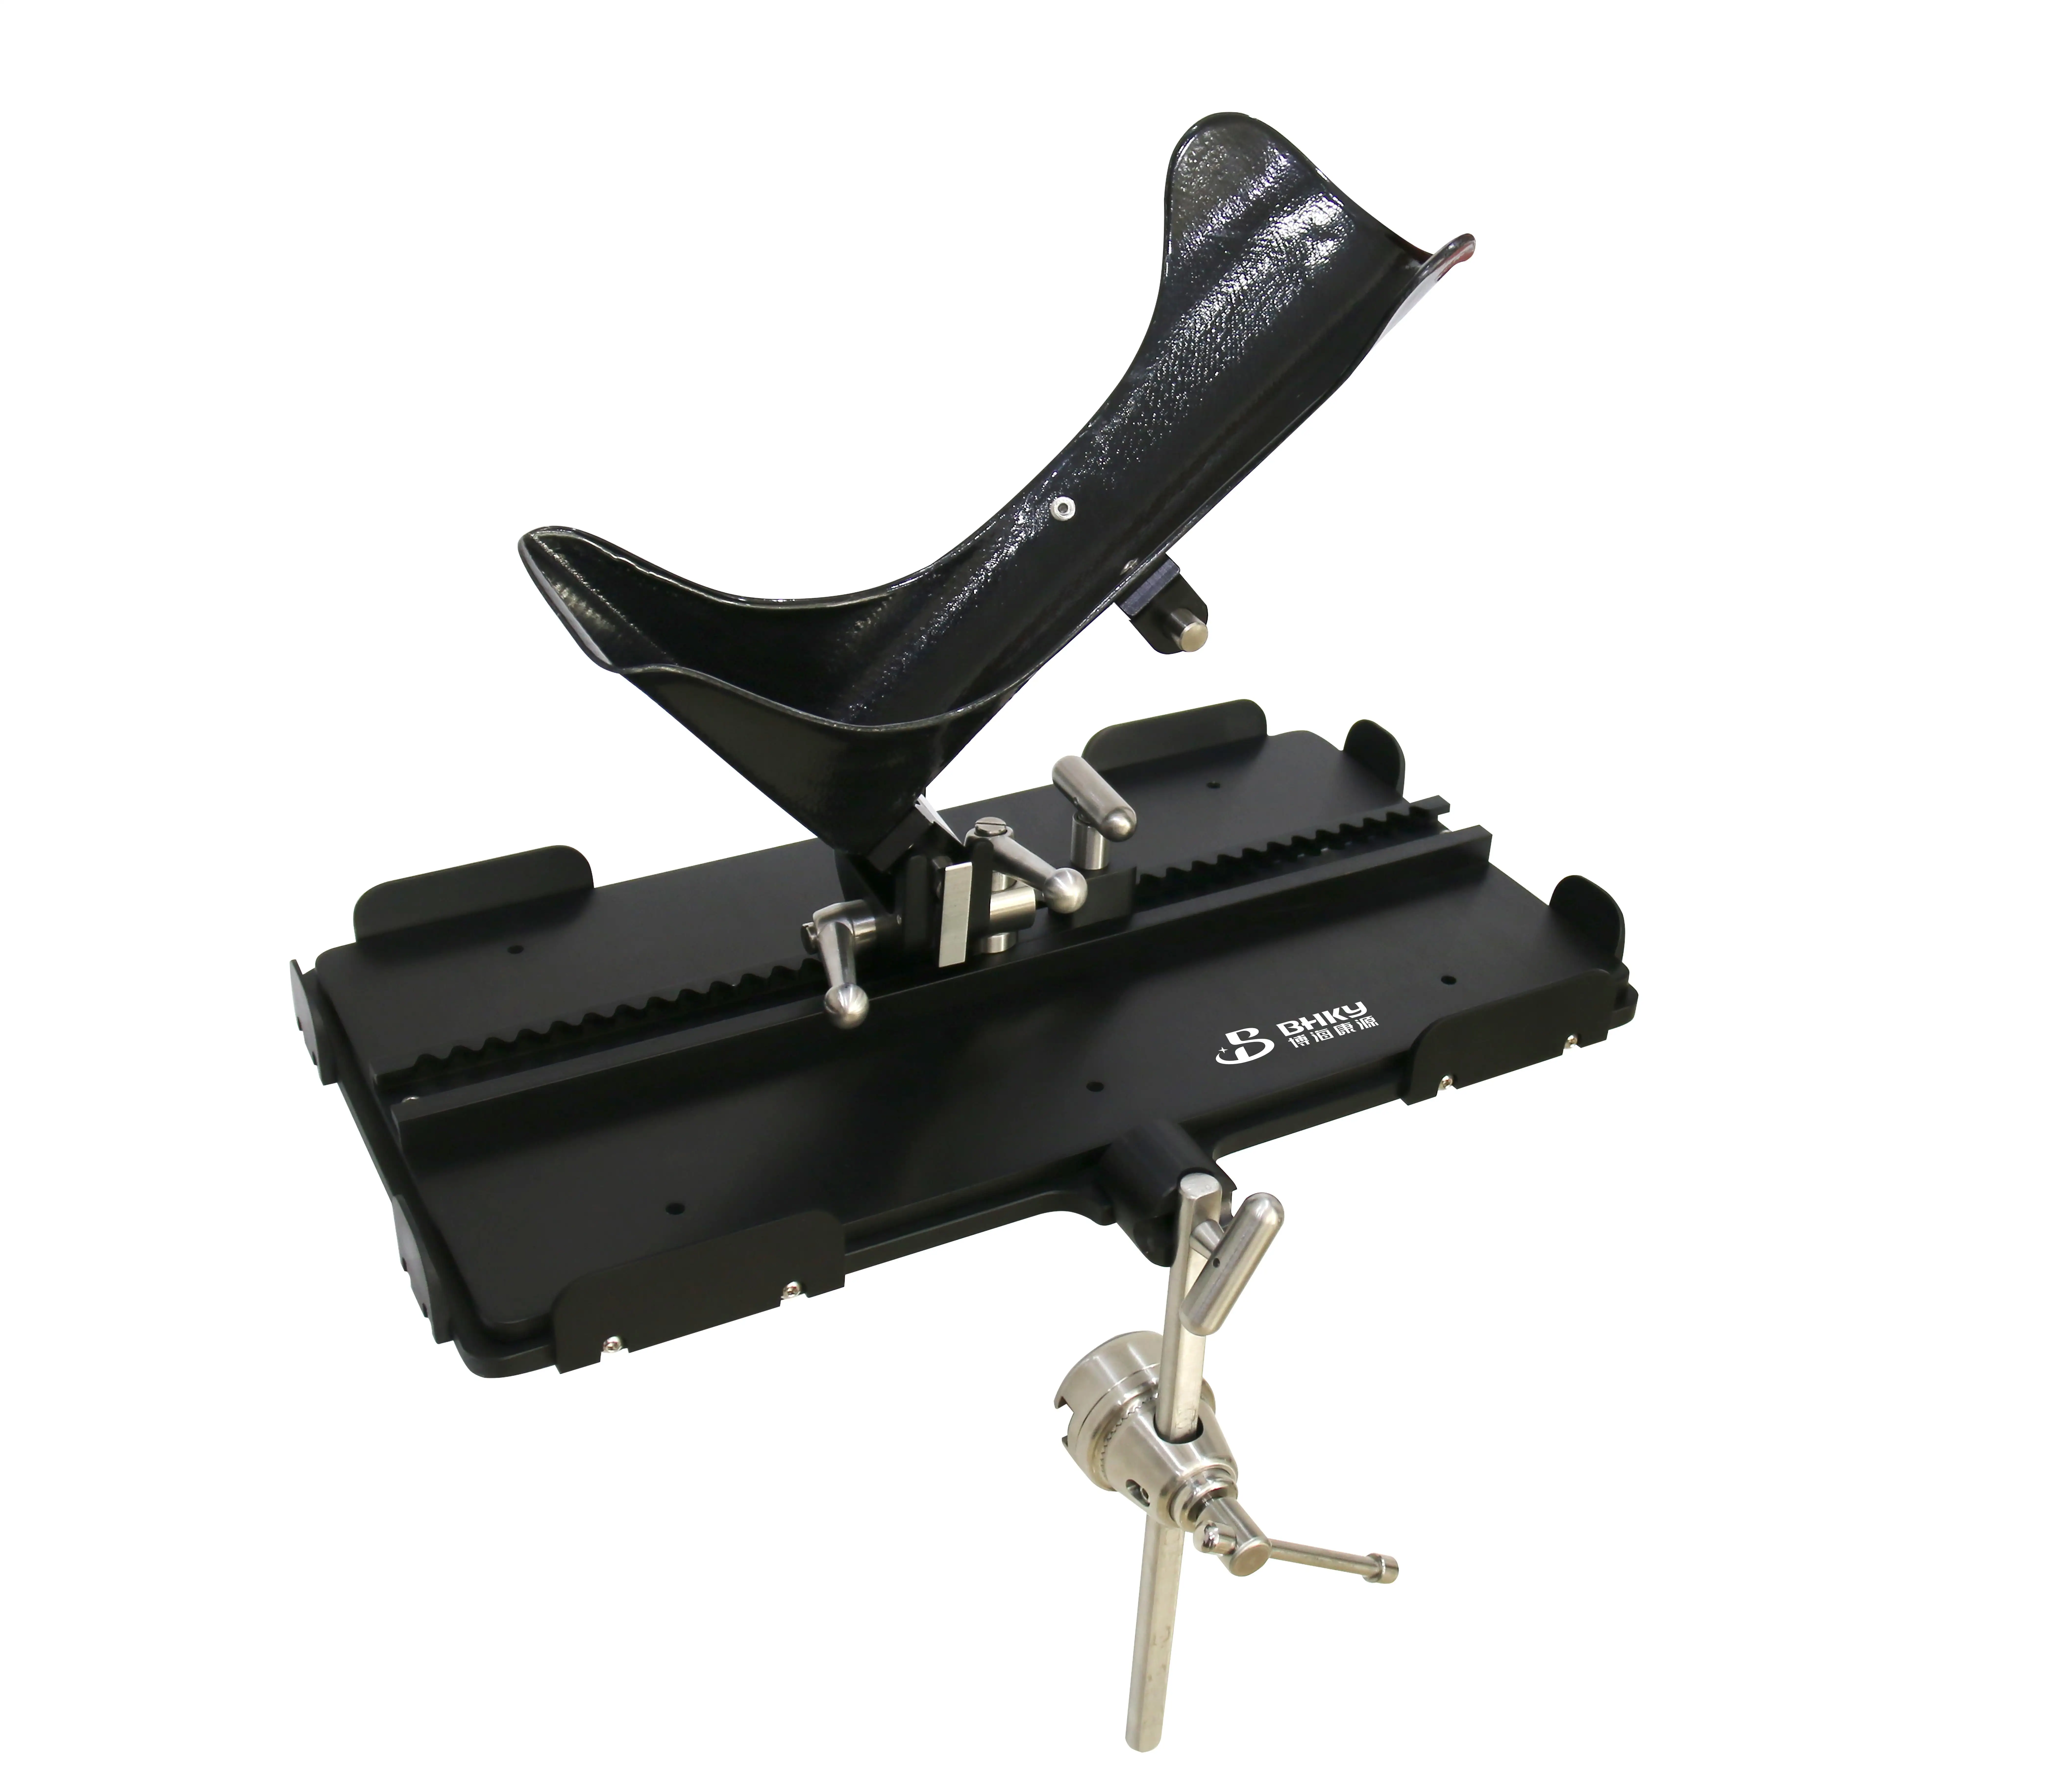 Best Sale Newest External Knee Surgery Equipment Adjustable Holder OF Opetation Table